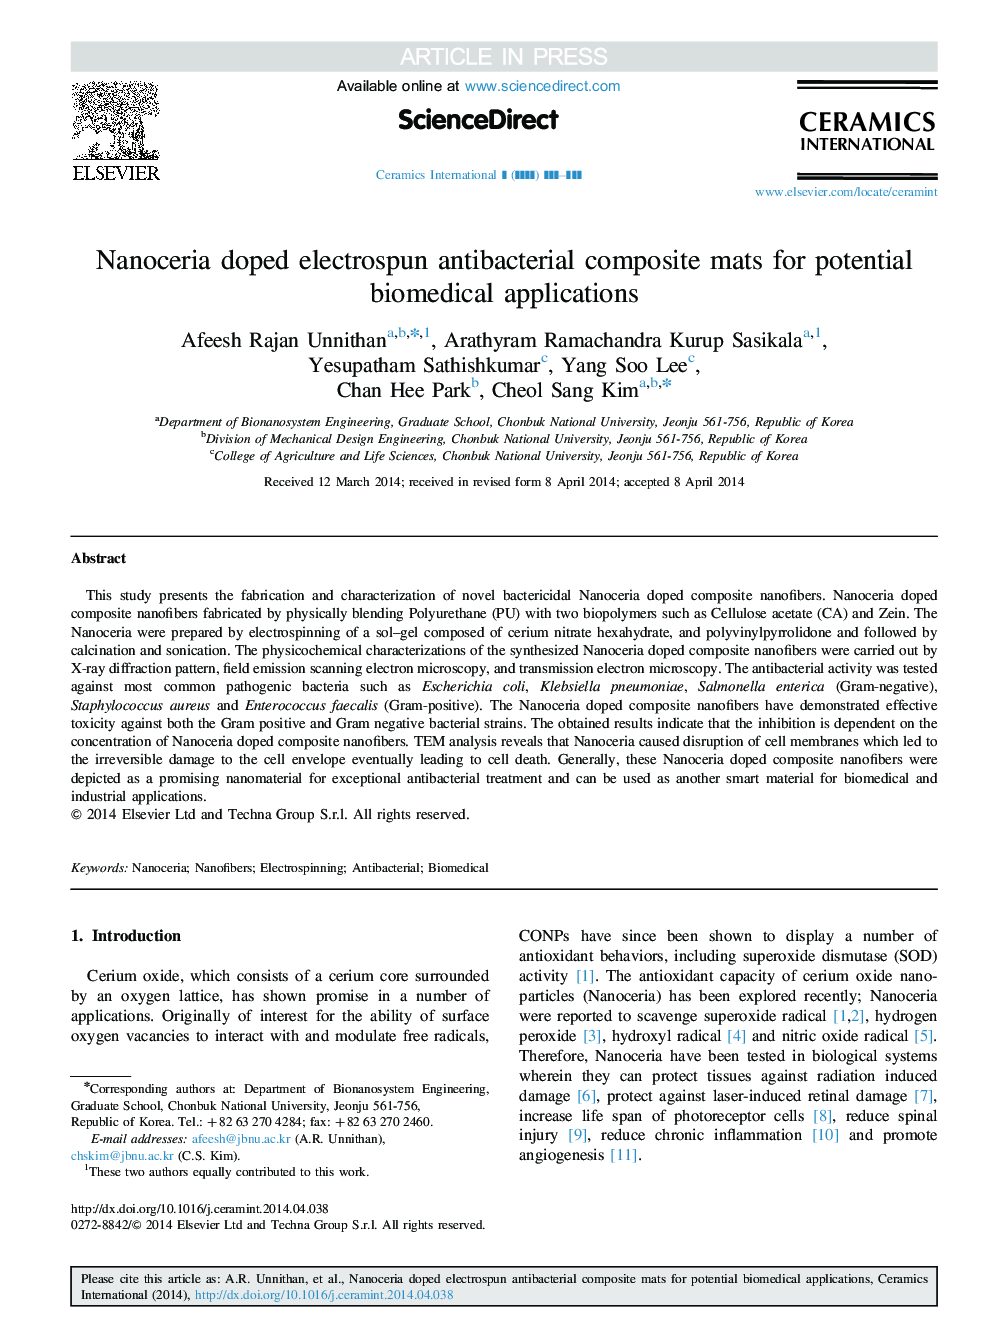 Nanoceria doped electrospun antibacterial composite mats for potential biomedical applications